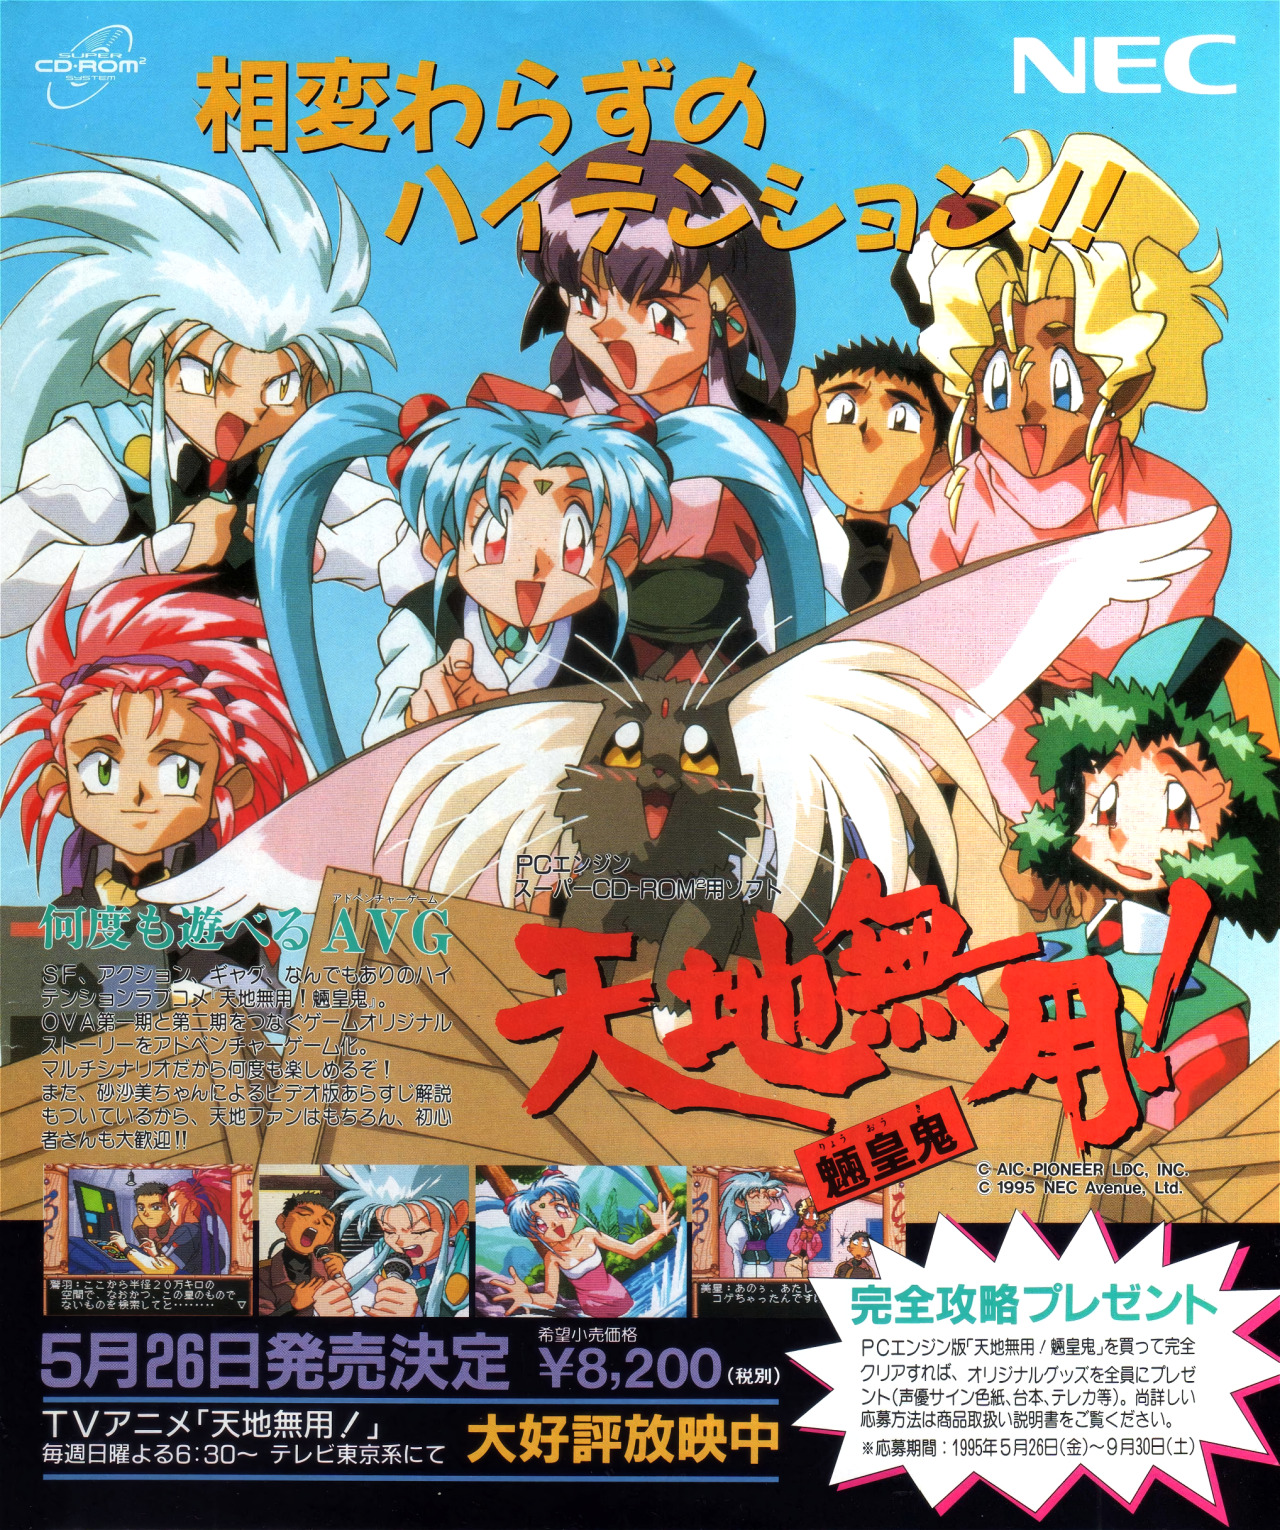 Tenchi Muyō! Ryo-Ohki for PC Engine Super-CD-ROM² / Newtype magazine (06/1995)